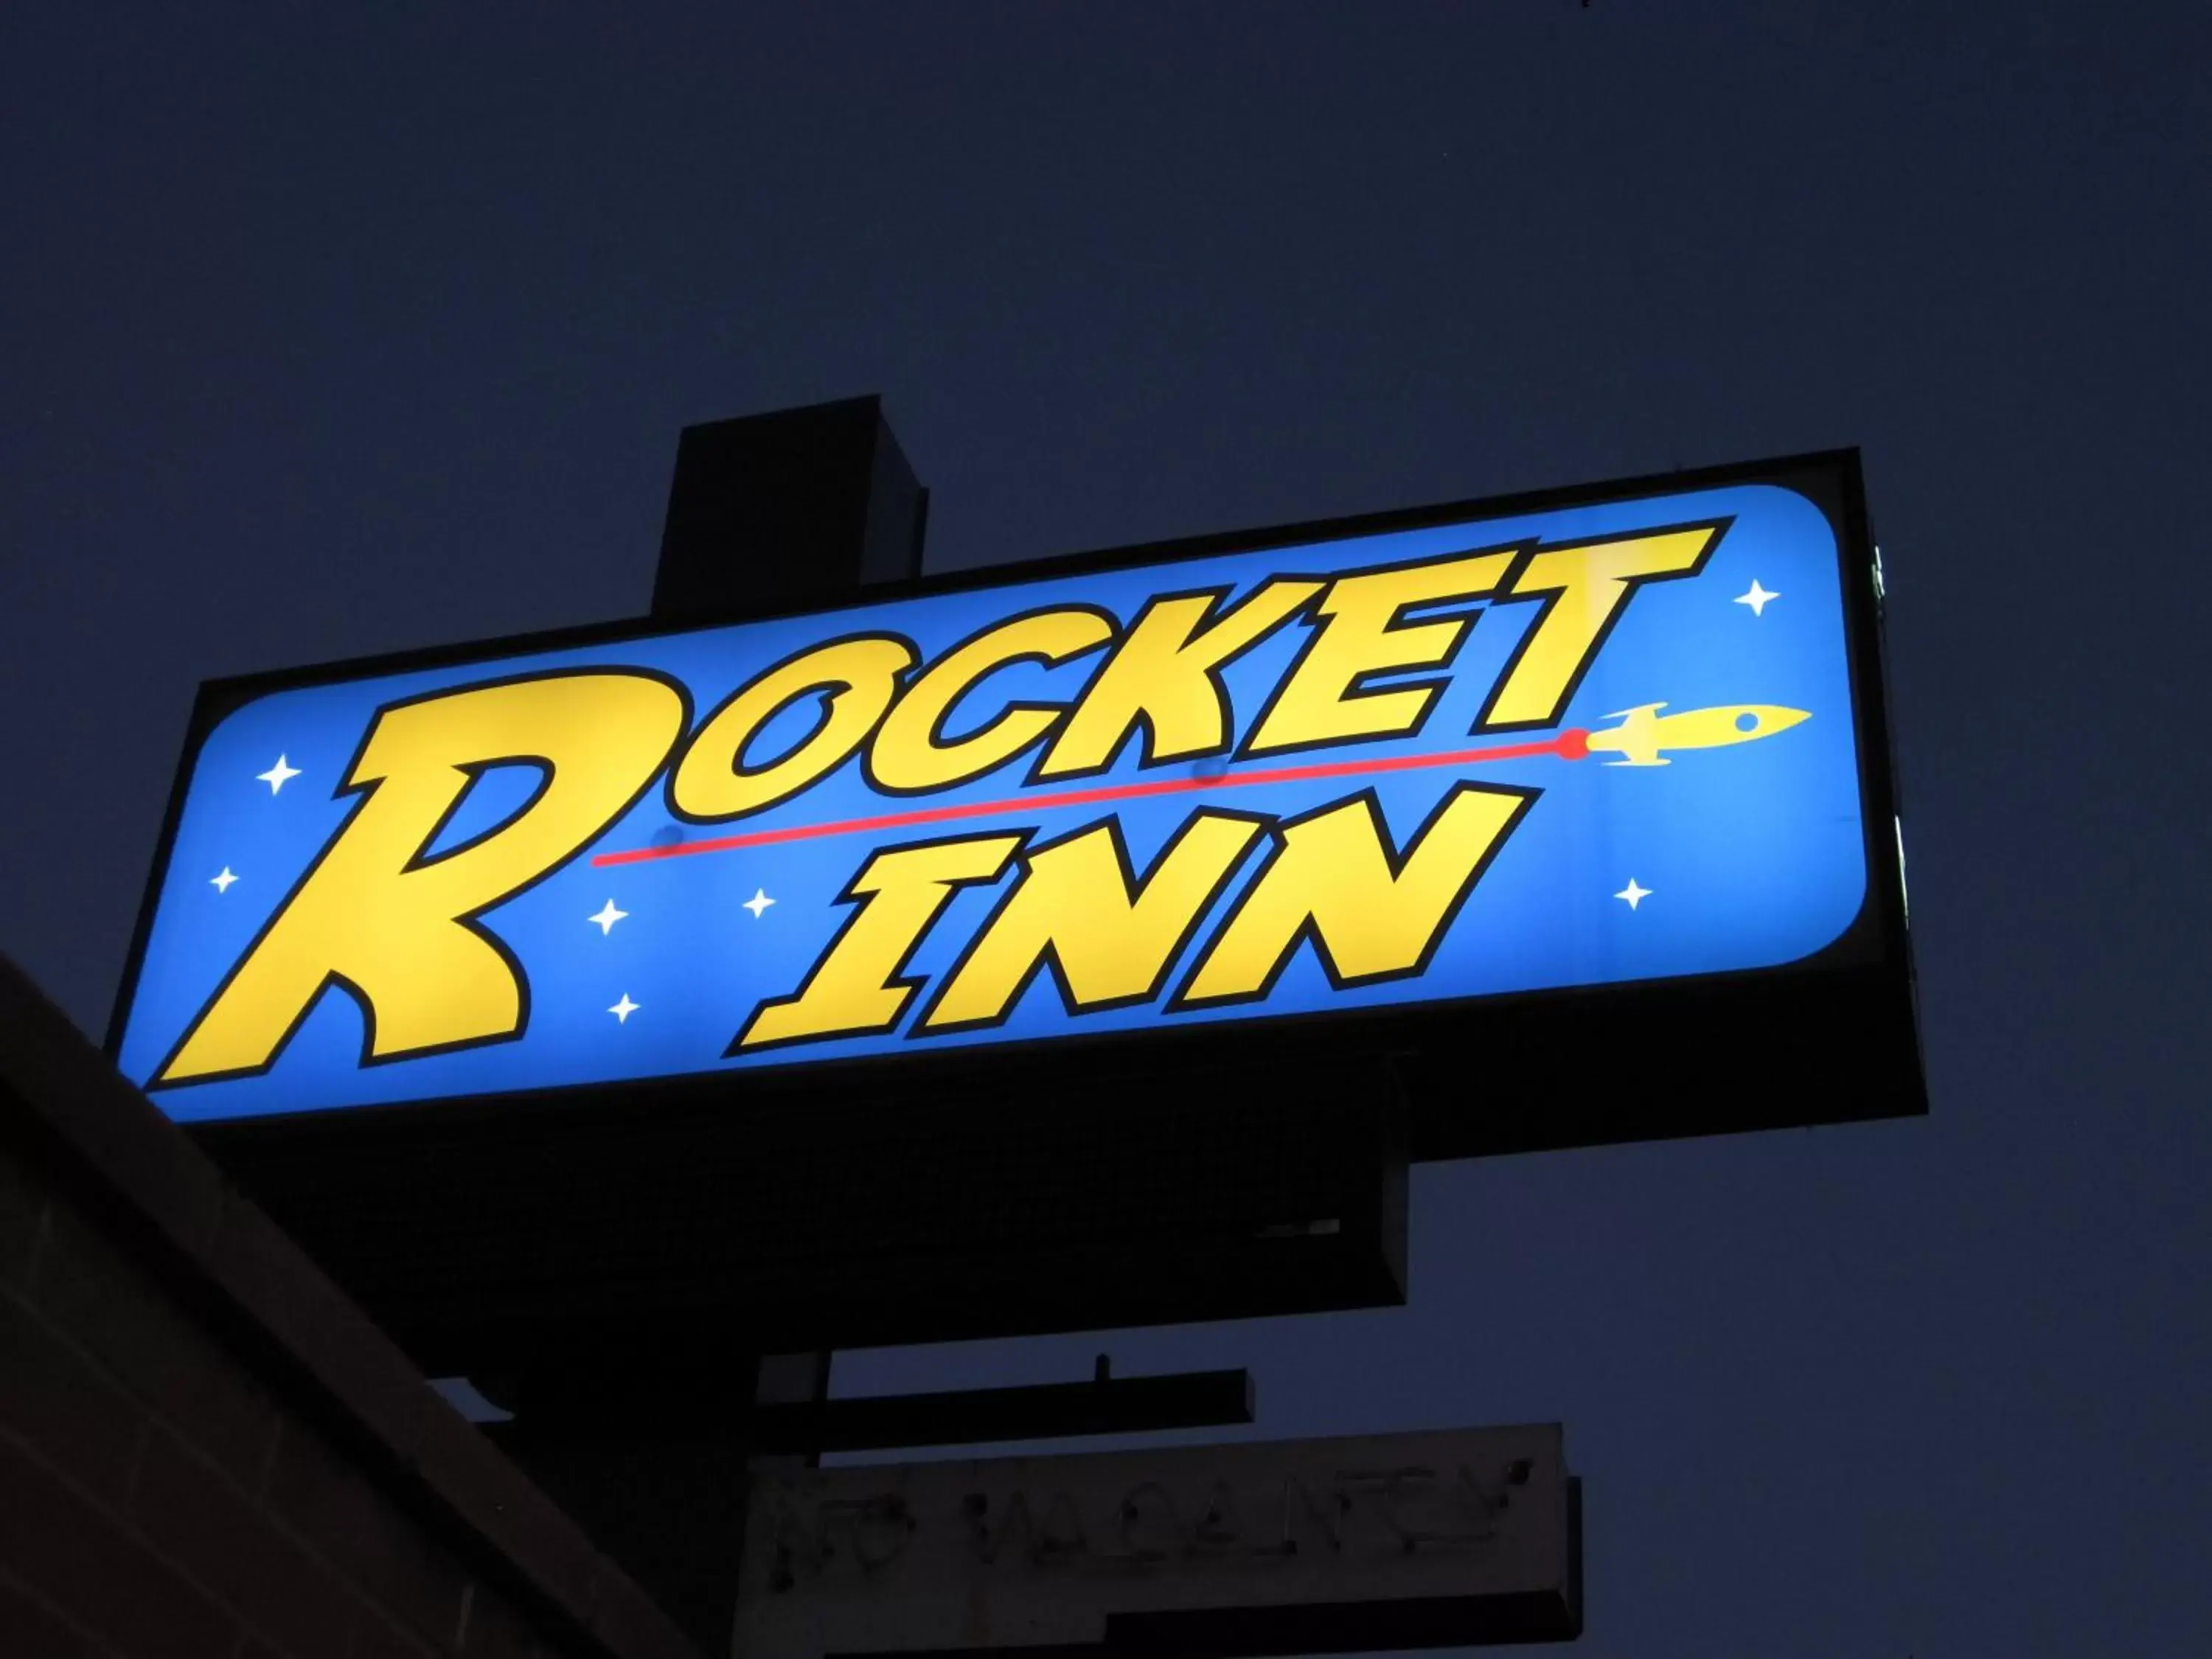 Night in Rocket Inn